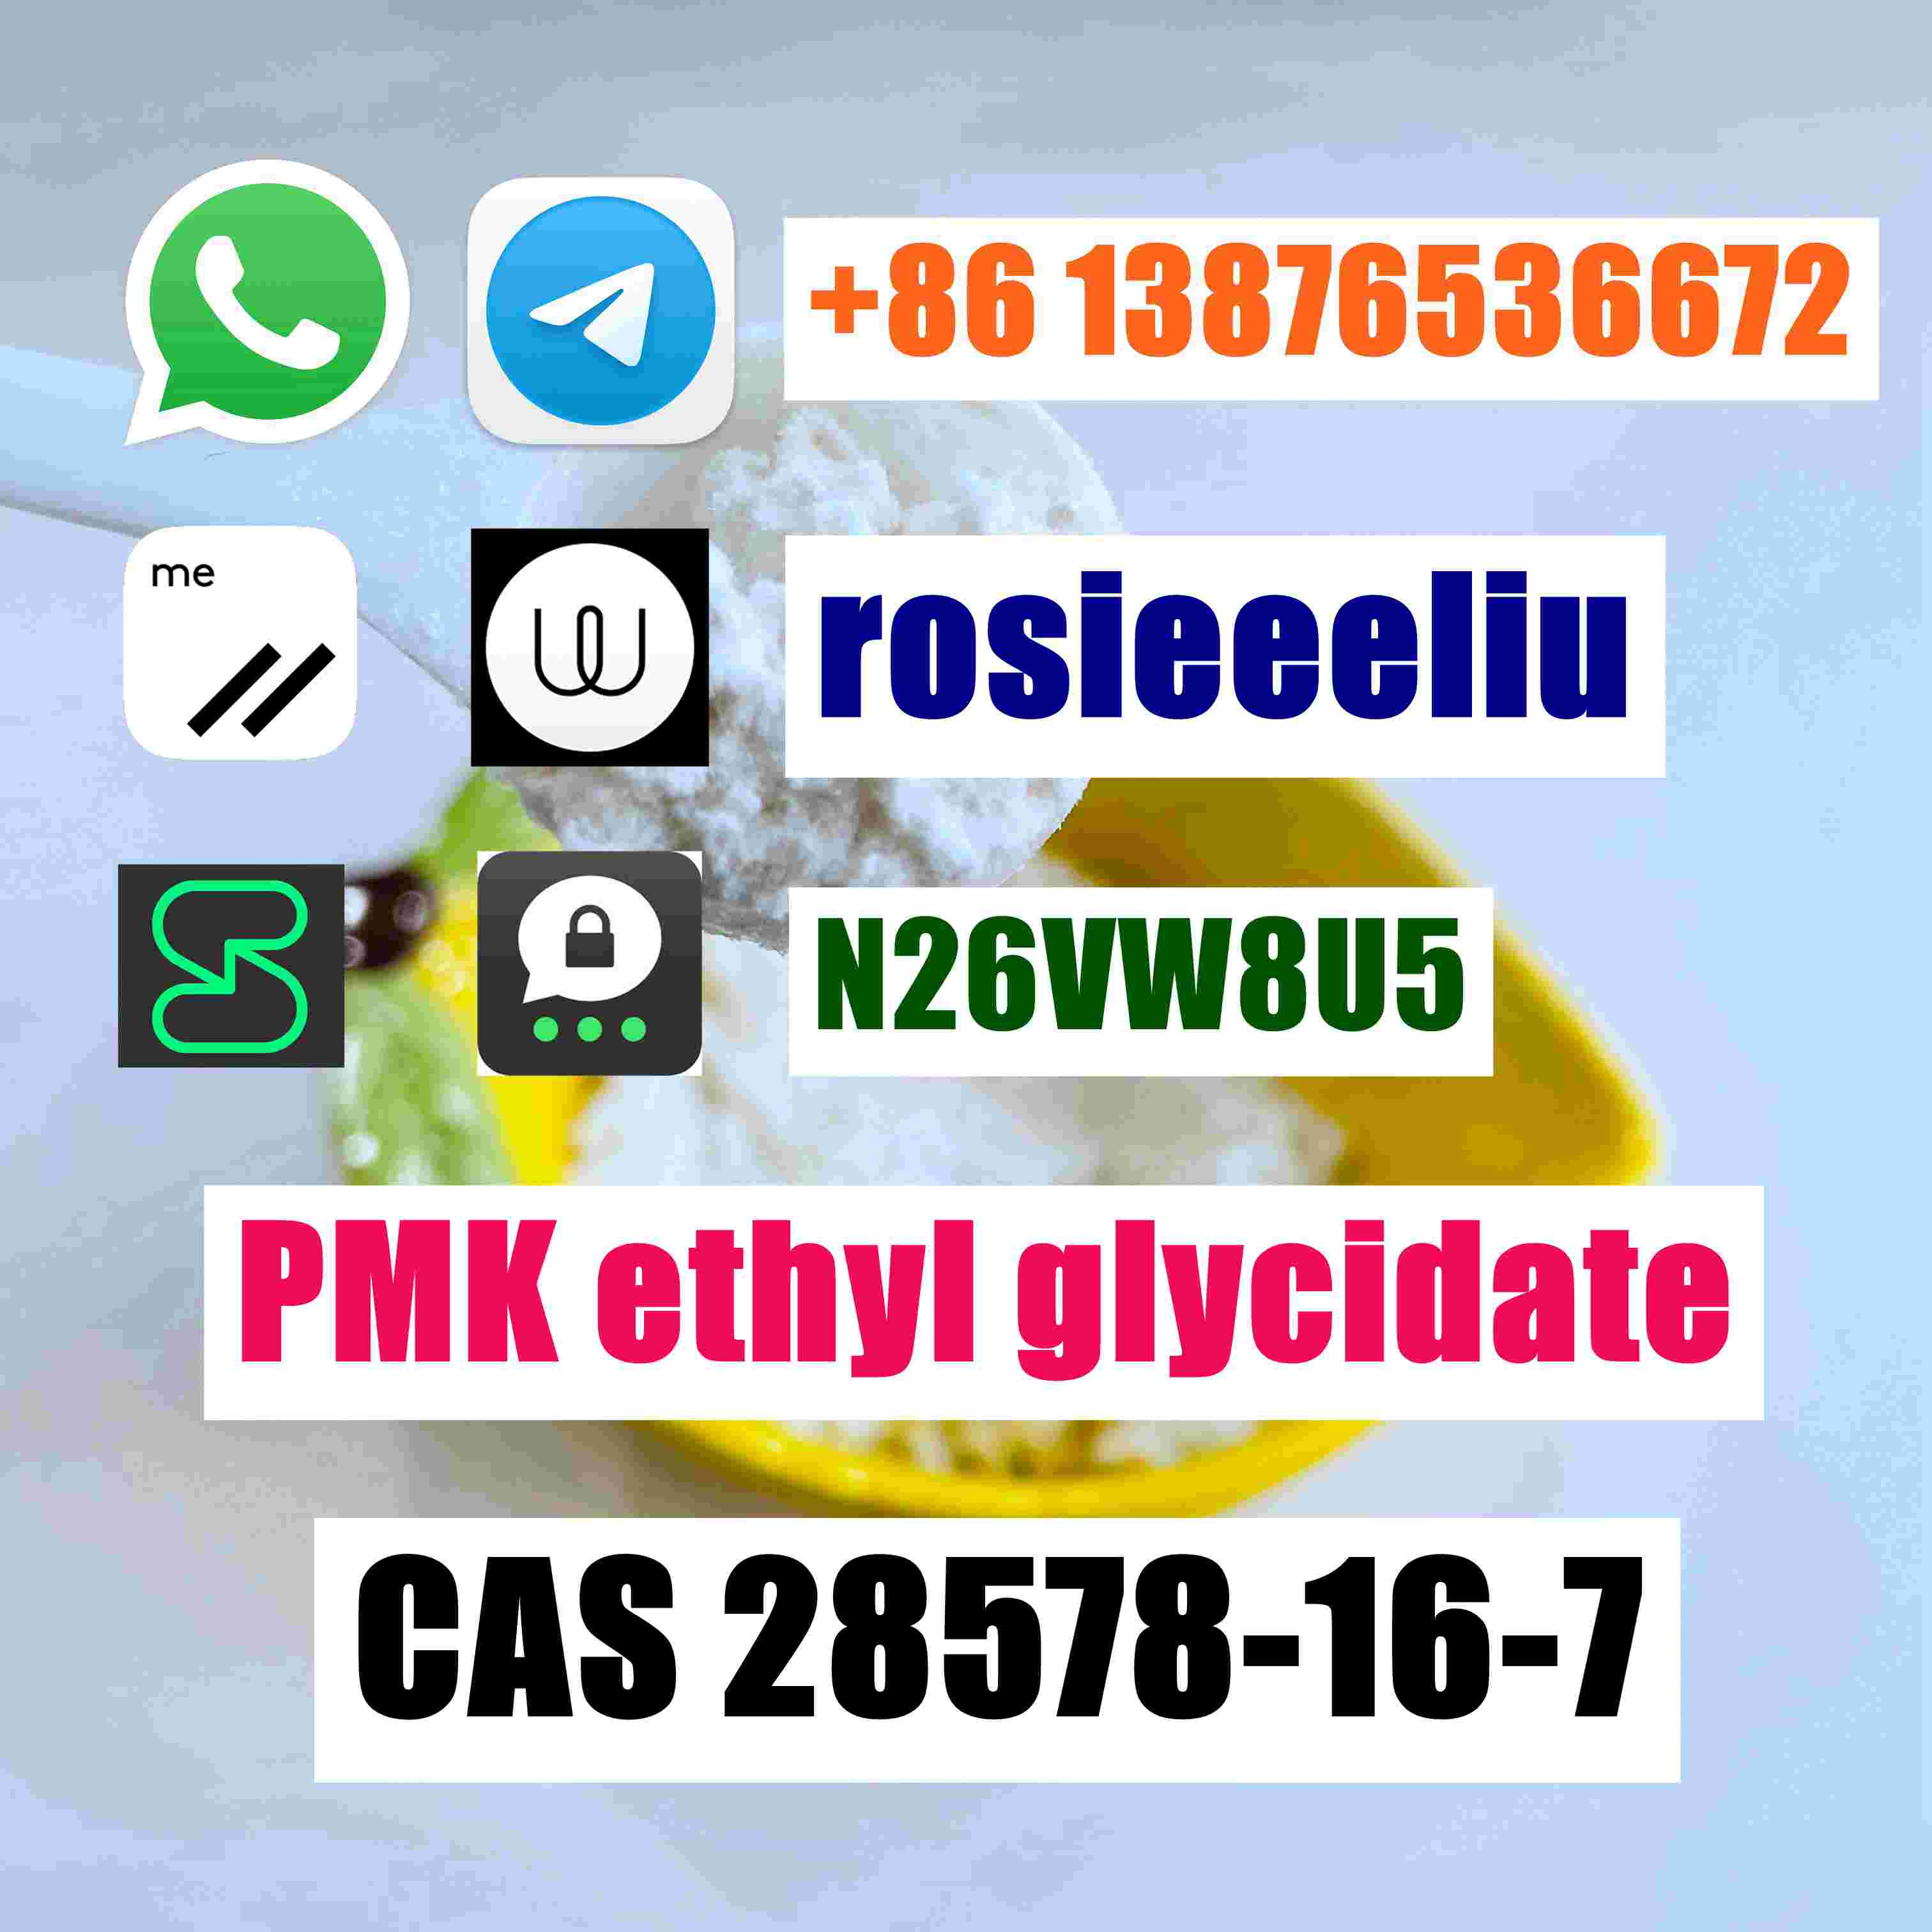 8613876536672-rosie@amarvelbio.com-28578-16-7-PMK ethyl glycidate-pmk oil-wickr .jpeg